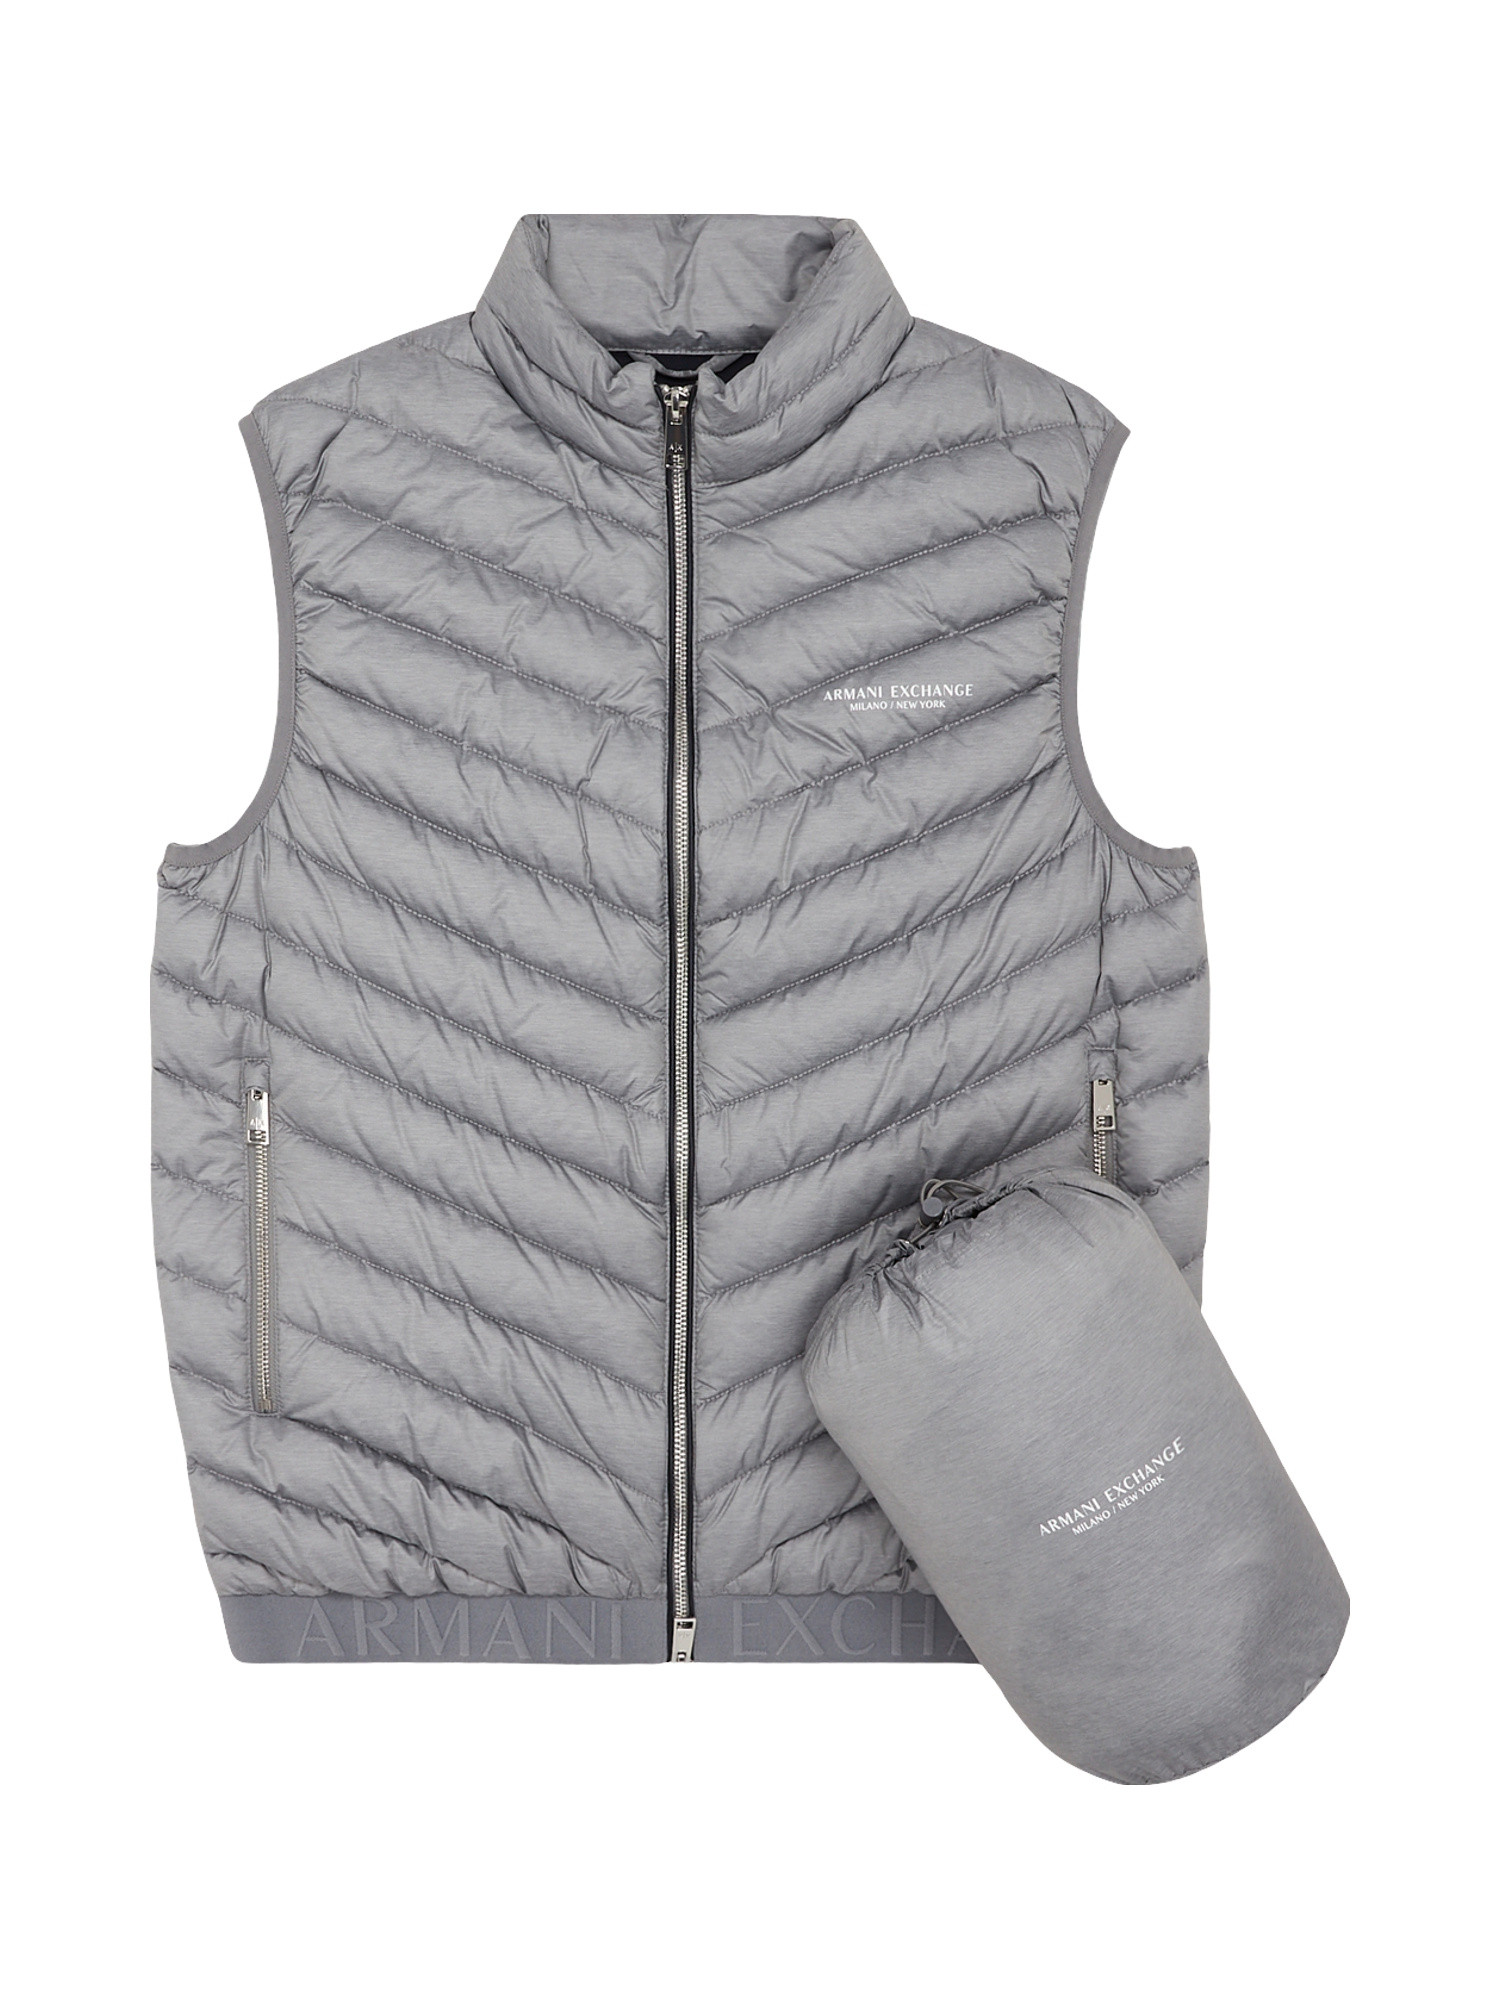 Armani Exchange - Padded sleeveless down jacket, Dark Grey, large image number 1